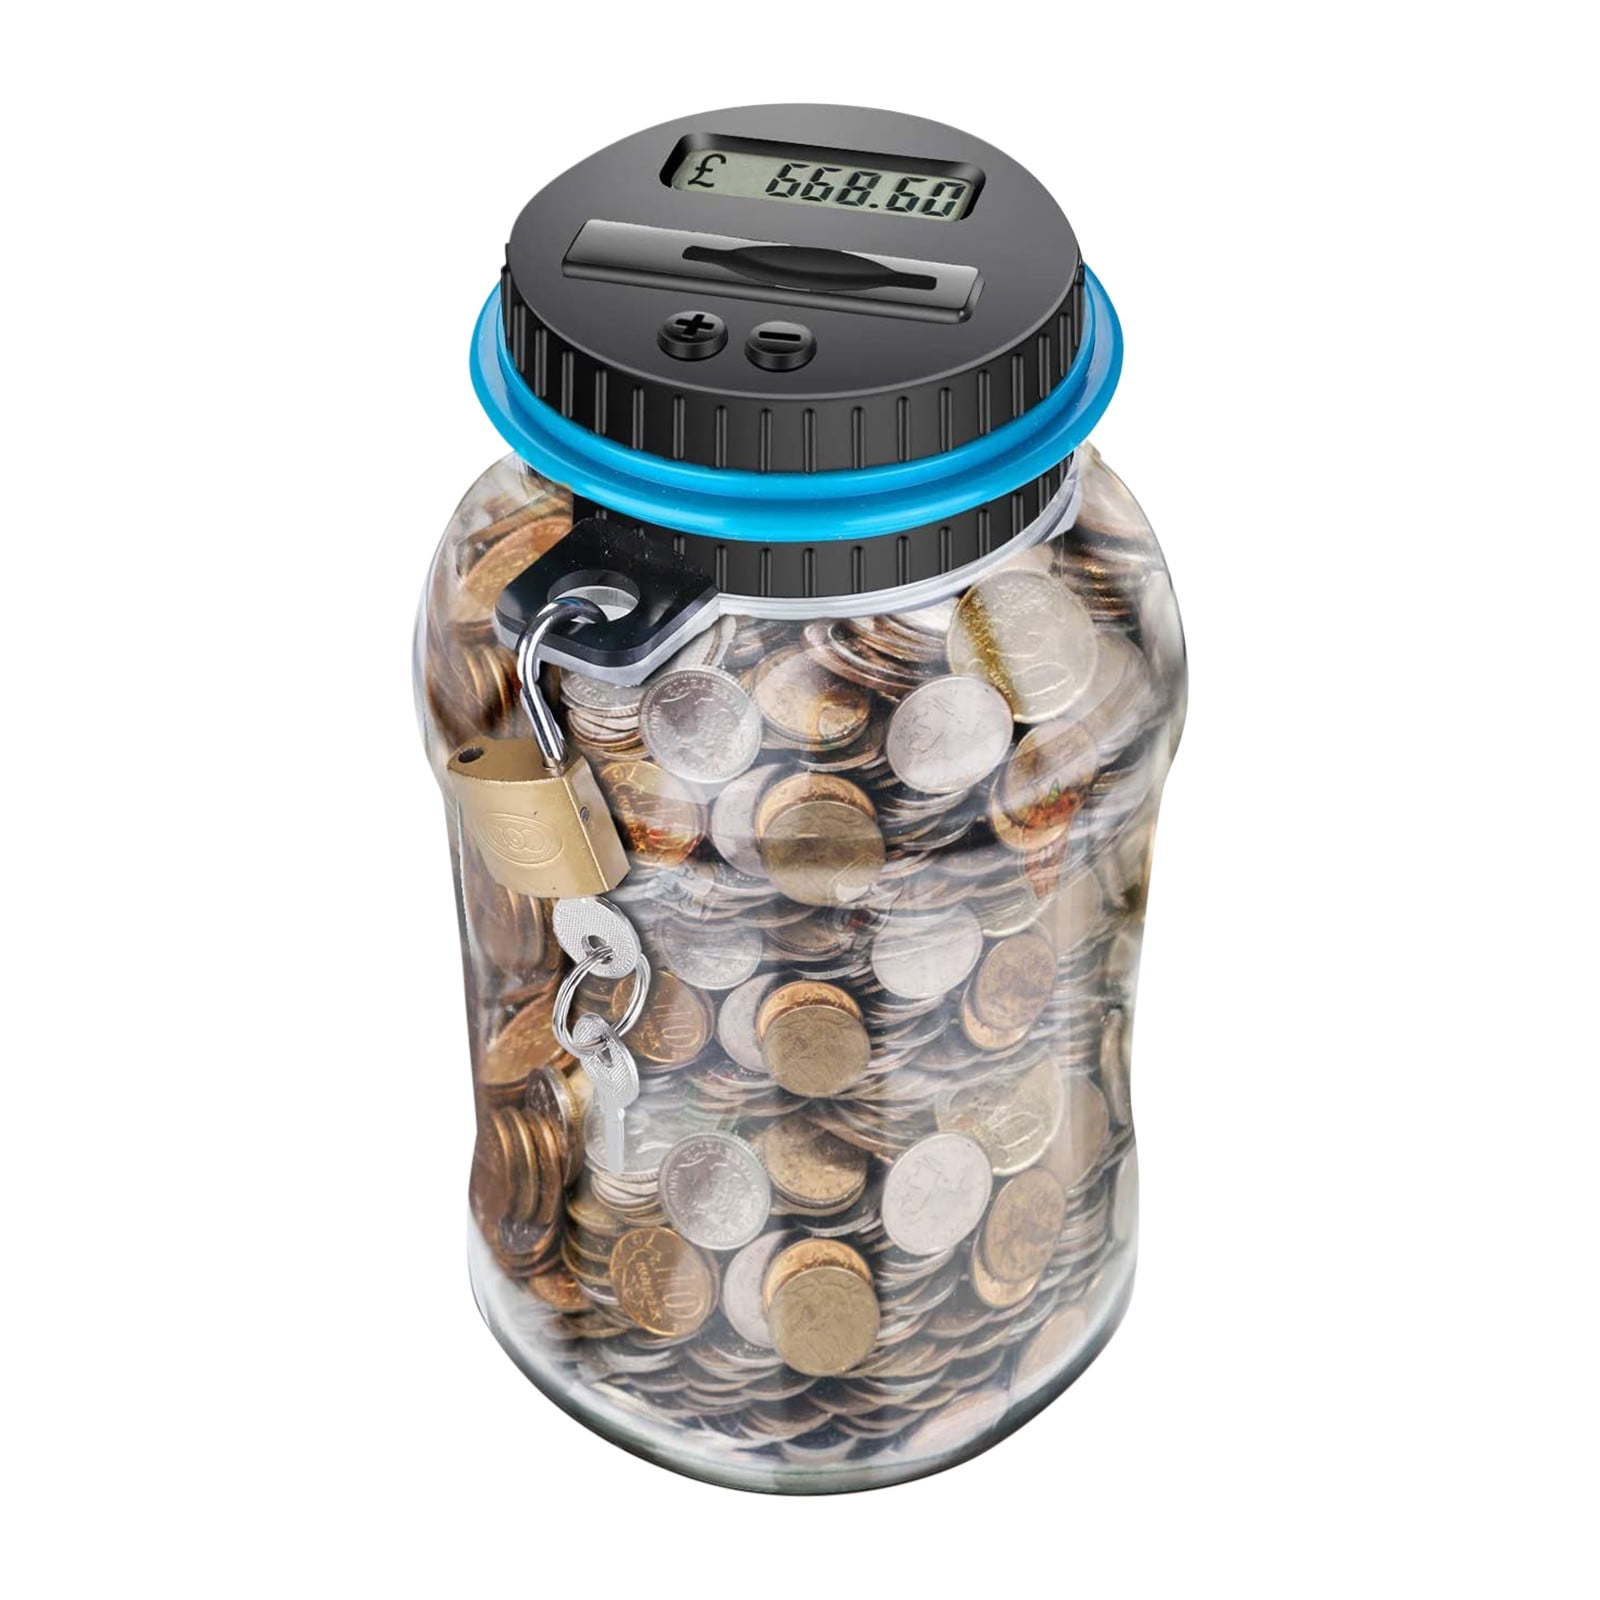 EZ-Count Money Jar Digital Coin Counter Electronic Piggy Banks